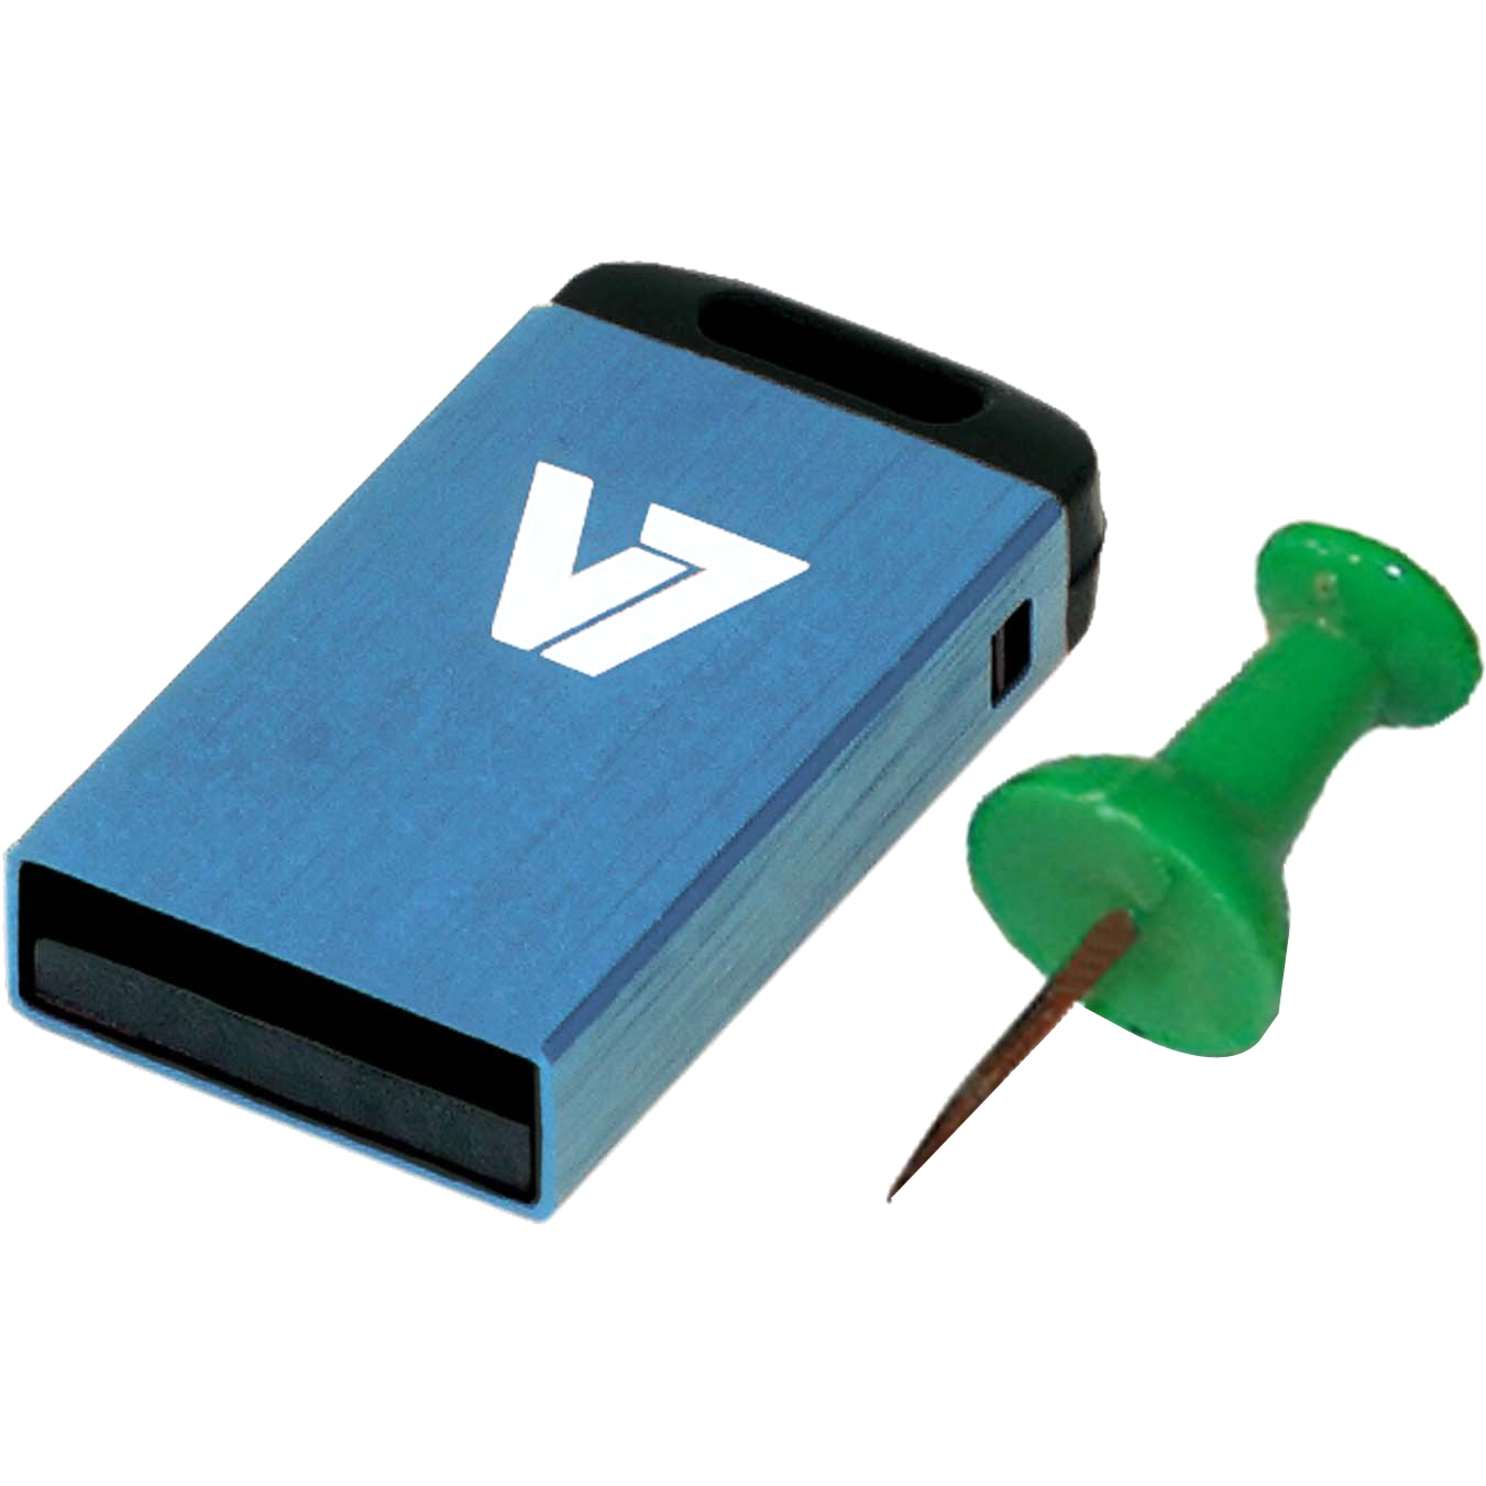 V7 8GB Blue Nano USB Flash Drive - image 4 of 4